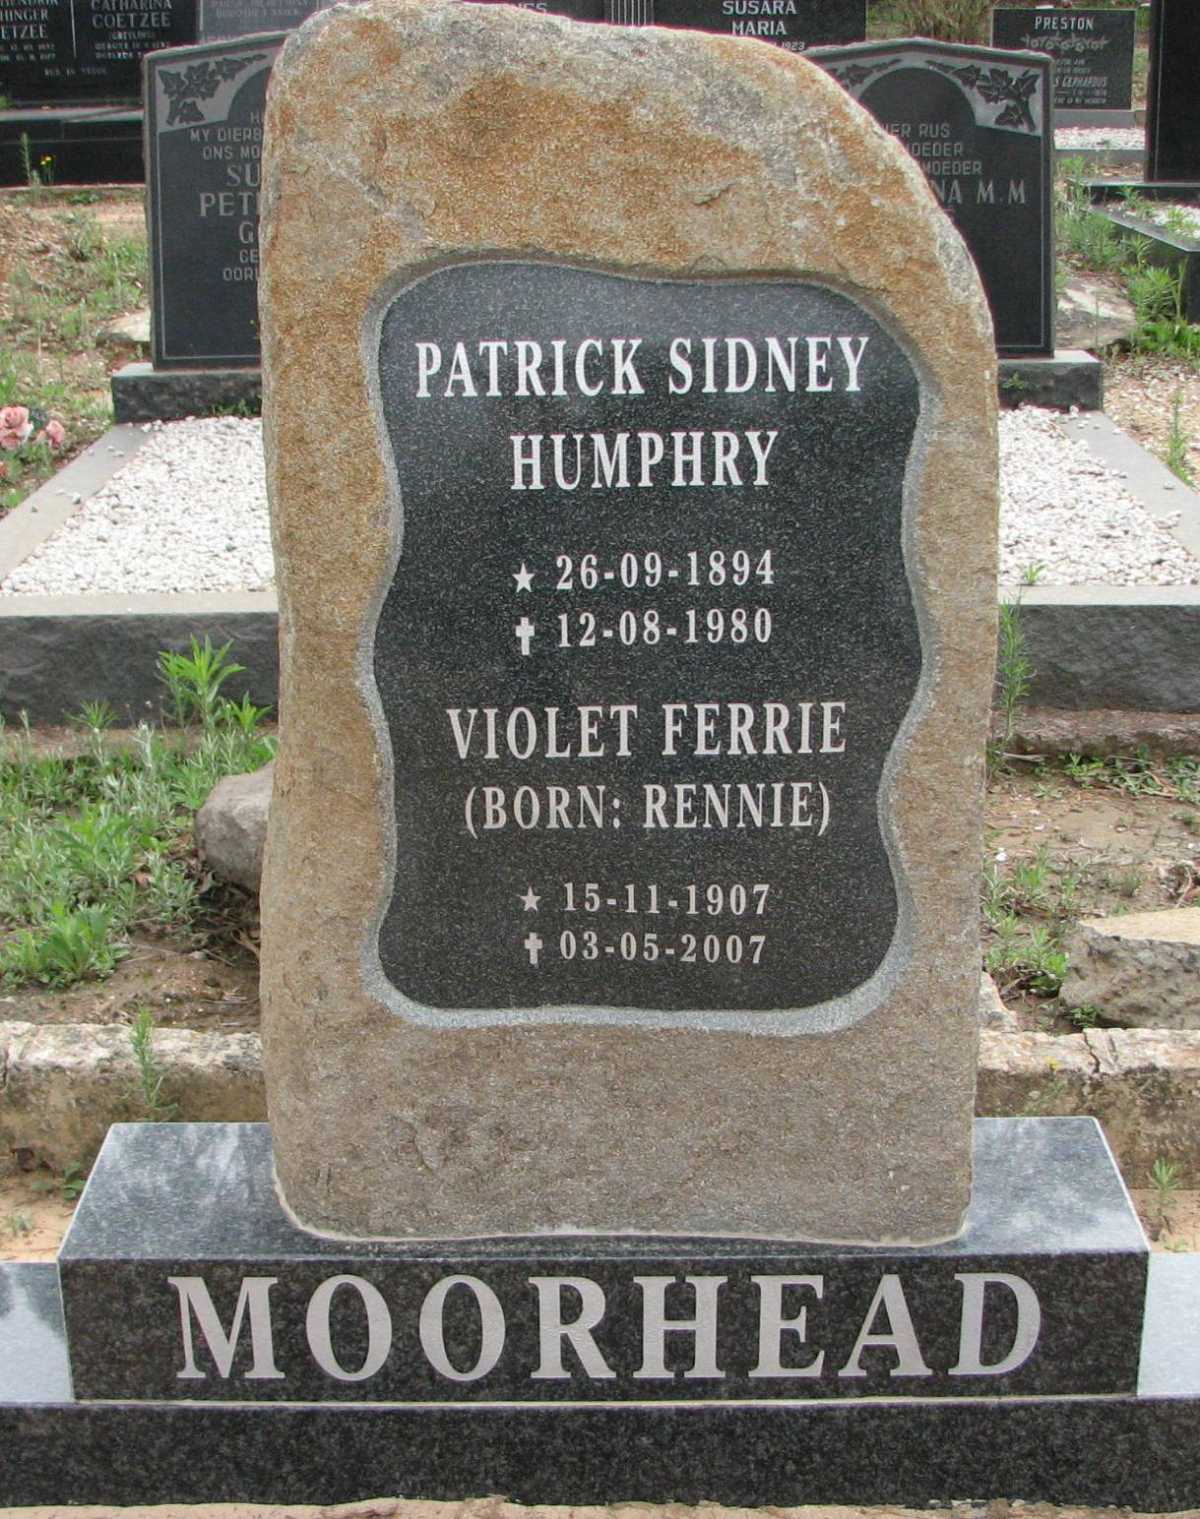 MOORHEAD Patrick Sydney Humphry 1894-1980 & Violet Ferrie RENNIE 1907-2007